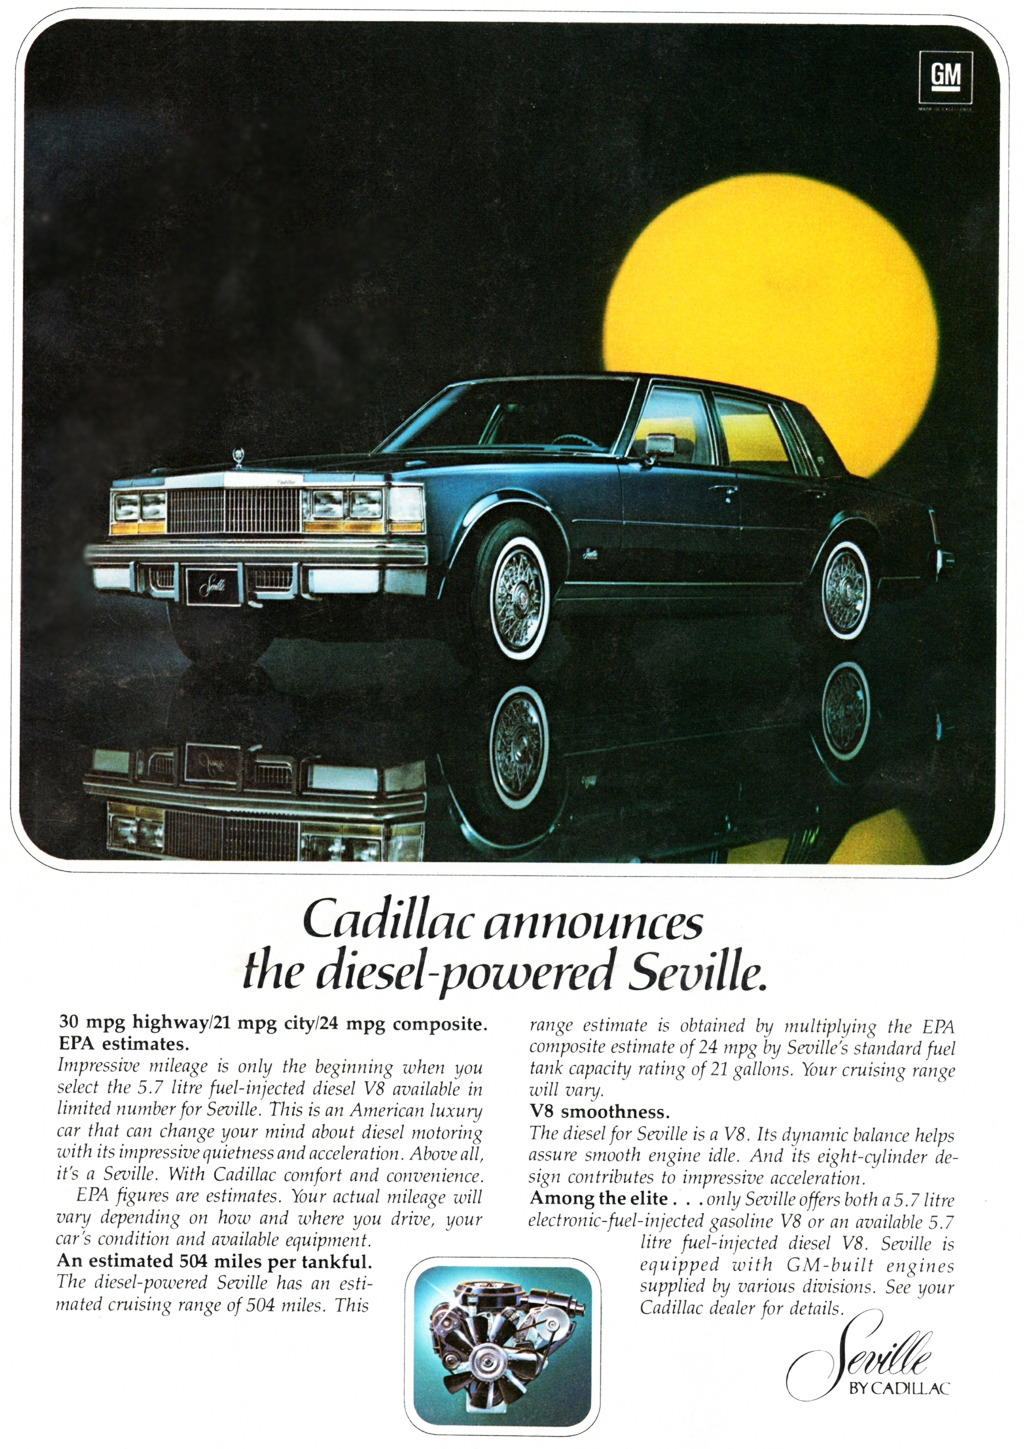 1978 Cadillac Seville diesel